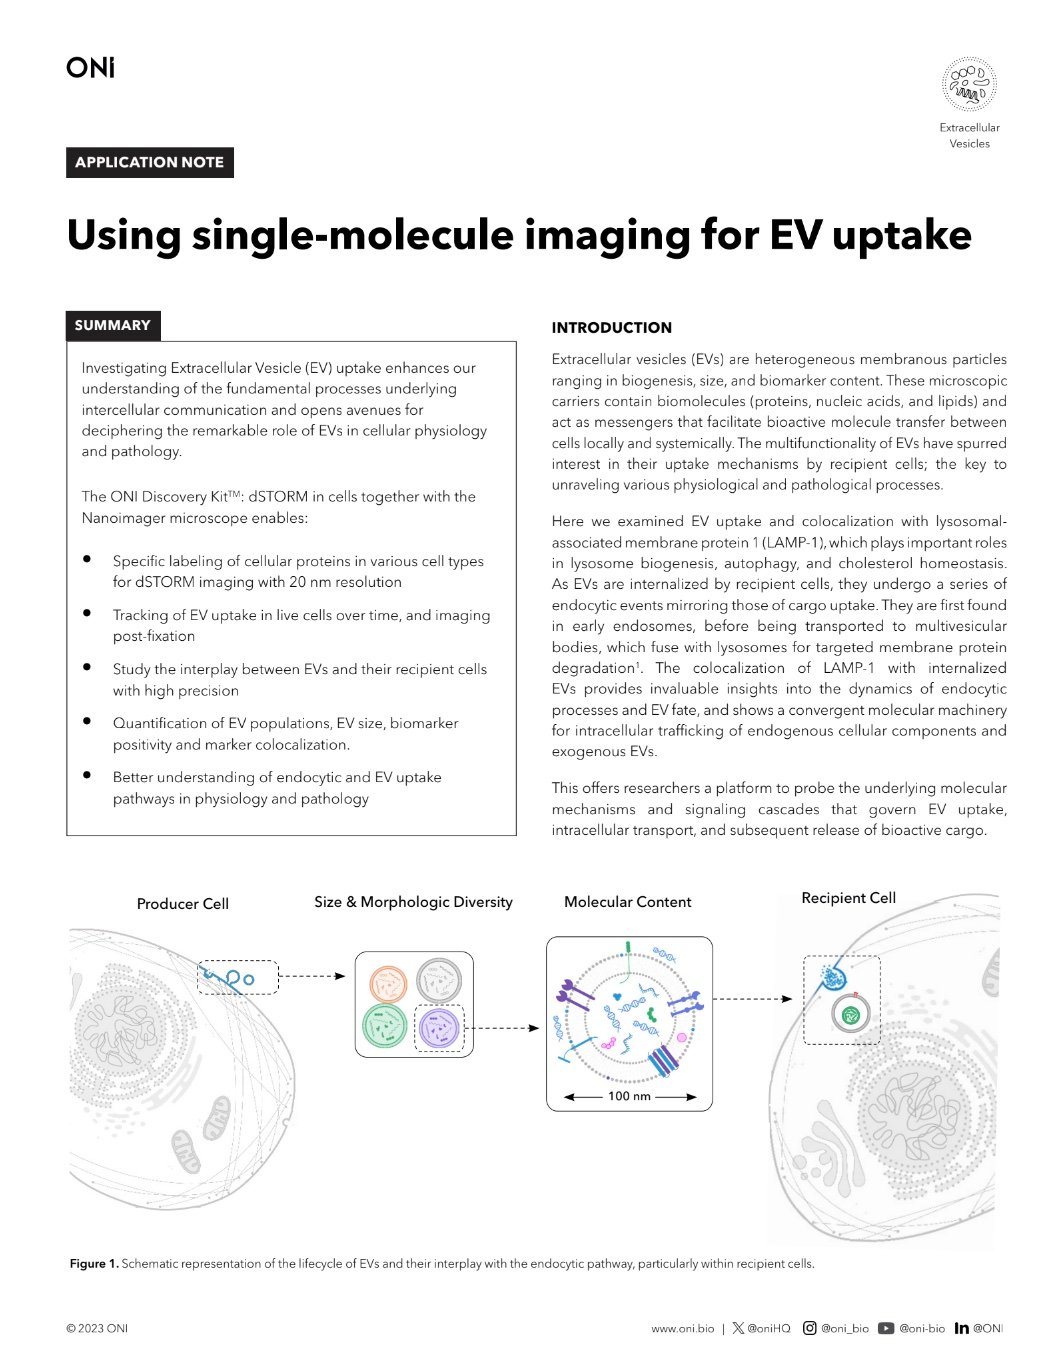 App note image EV uptake in live cells